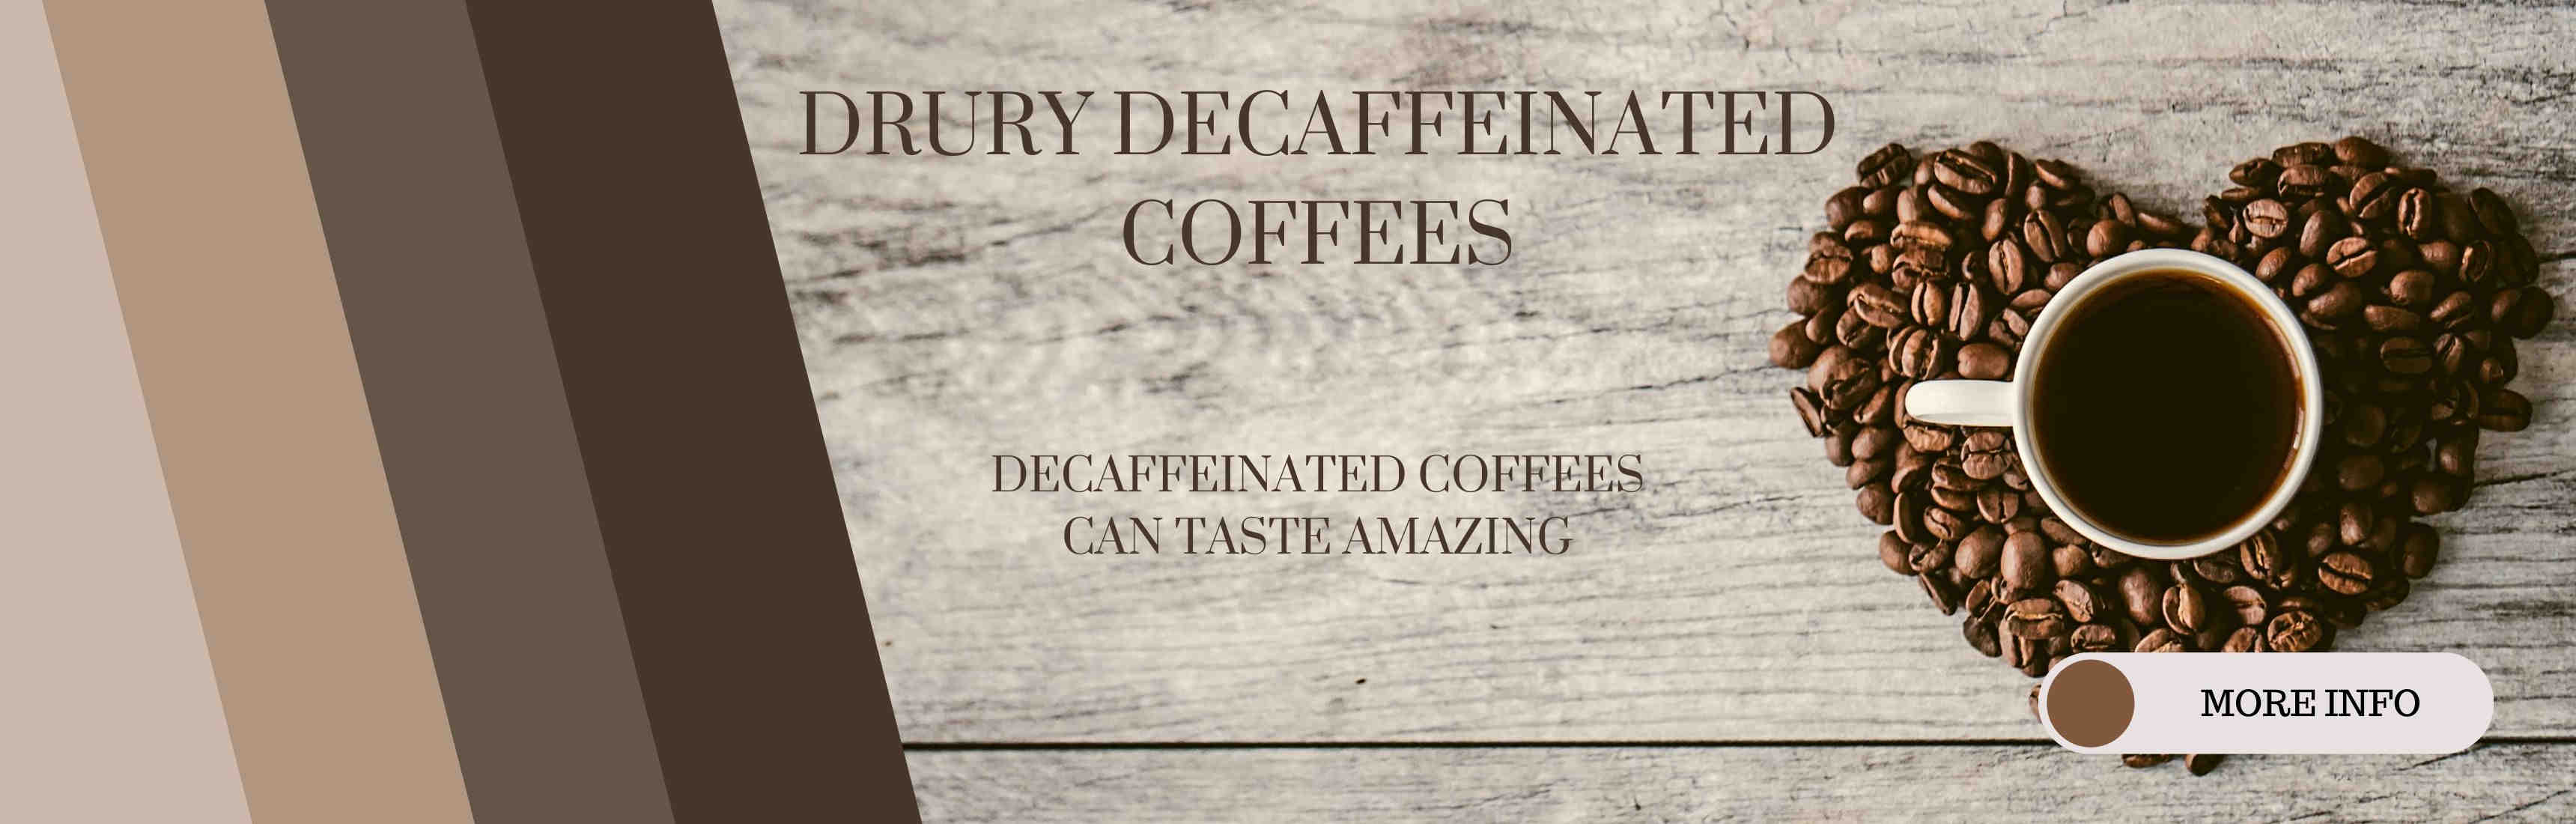 Drury Decaffeinated Coffee Banner